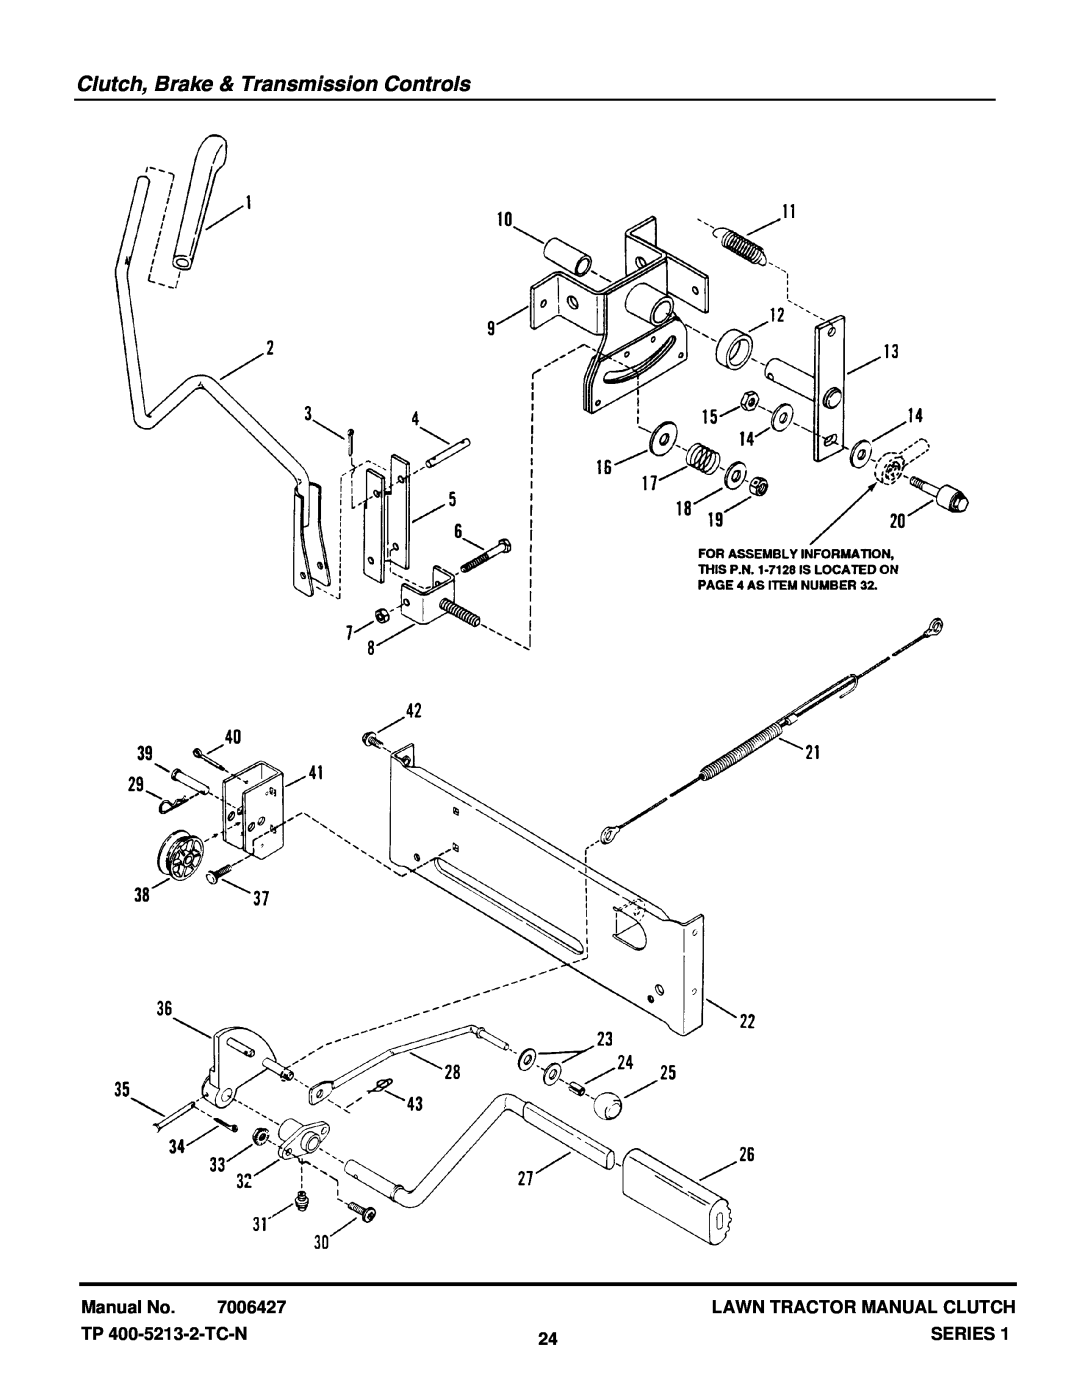 Snapper RLT140H331KV manual Clutch, Brake & Transmission Controls, Manual No, 7006427, Lawn Tractor Manual Clutch, Series 